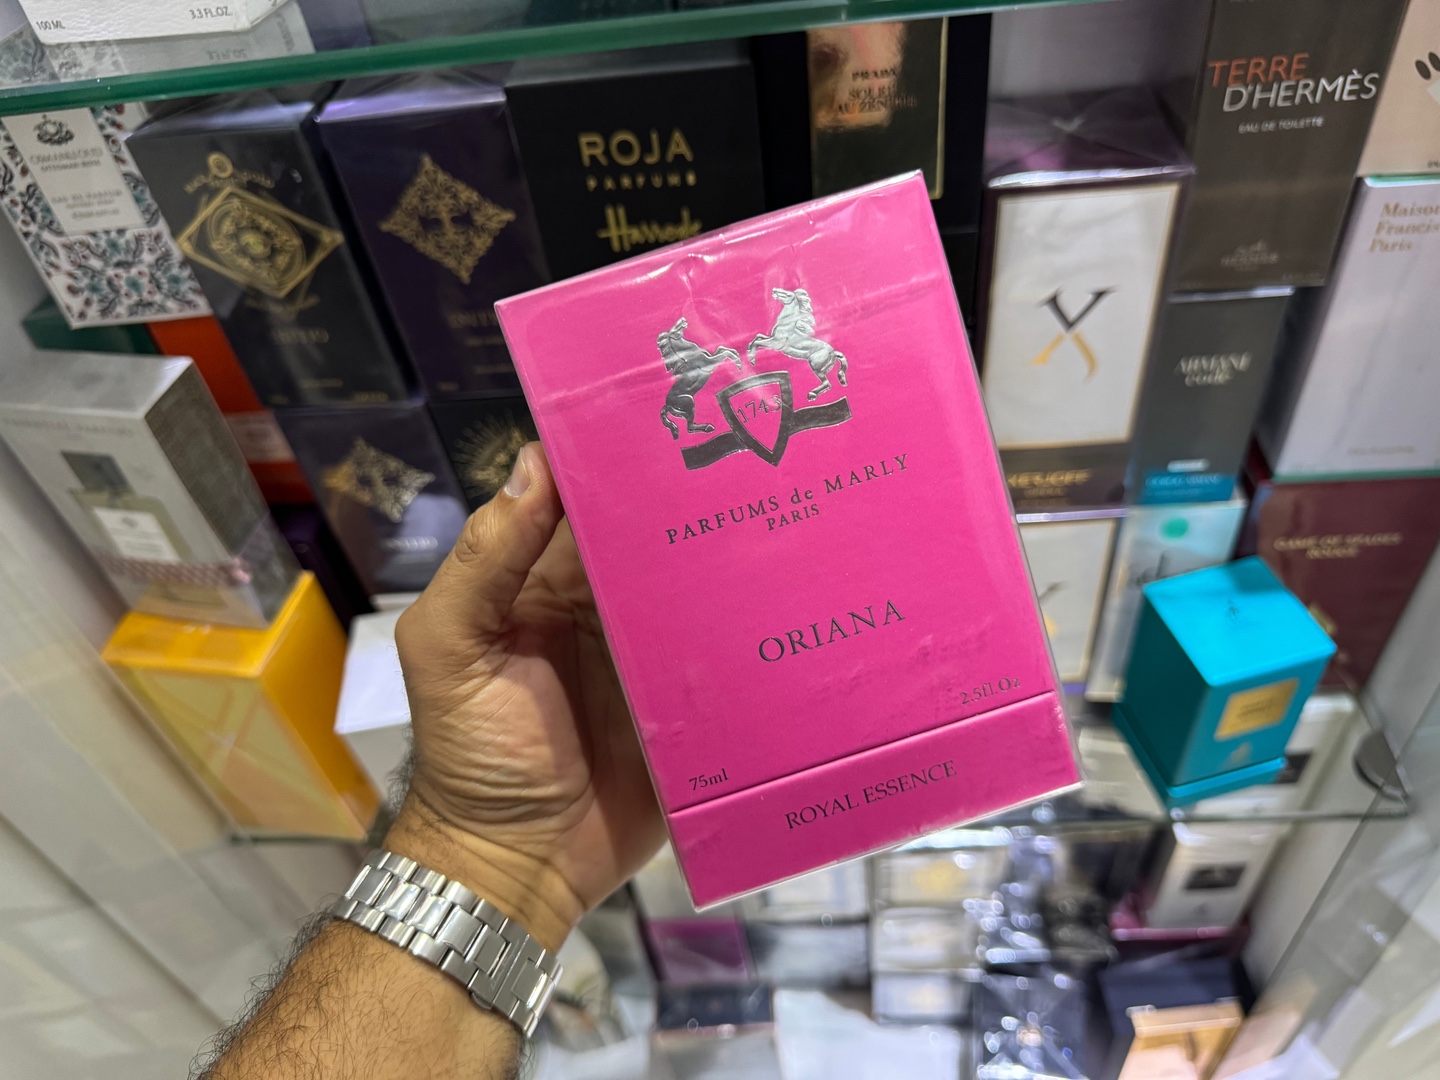 joyas, relojes y accesorios - Perfume Parfums de Marly ORIANA Royal Essence 75ml Nuevo, Original $ 15,500 NEG 0